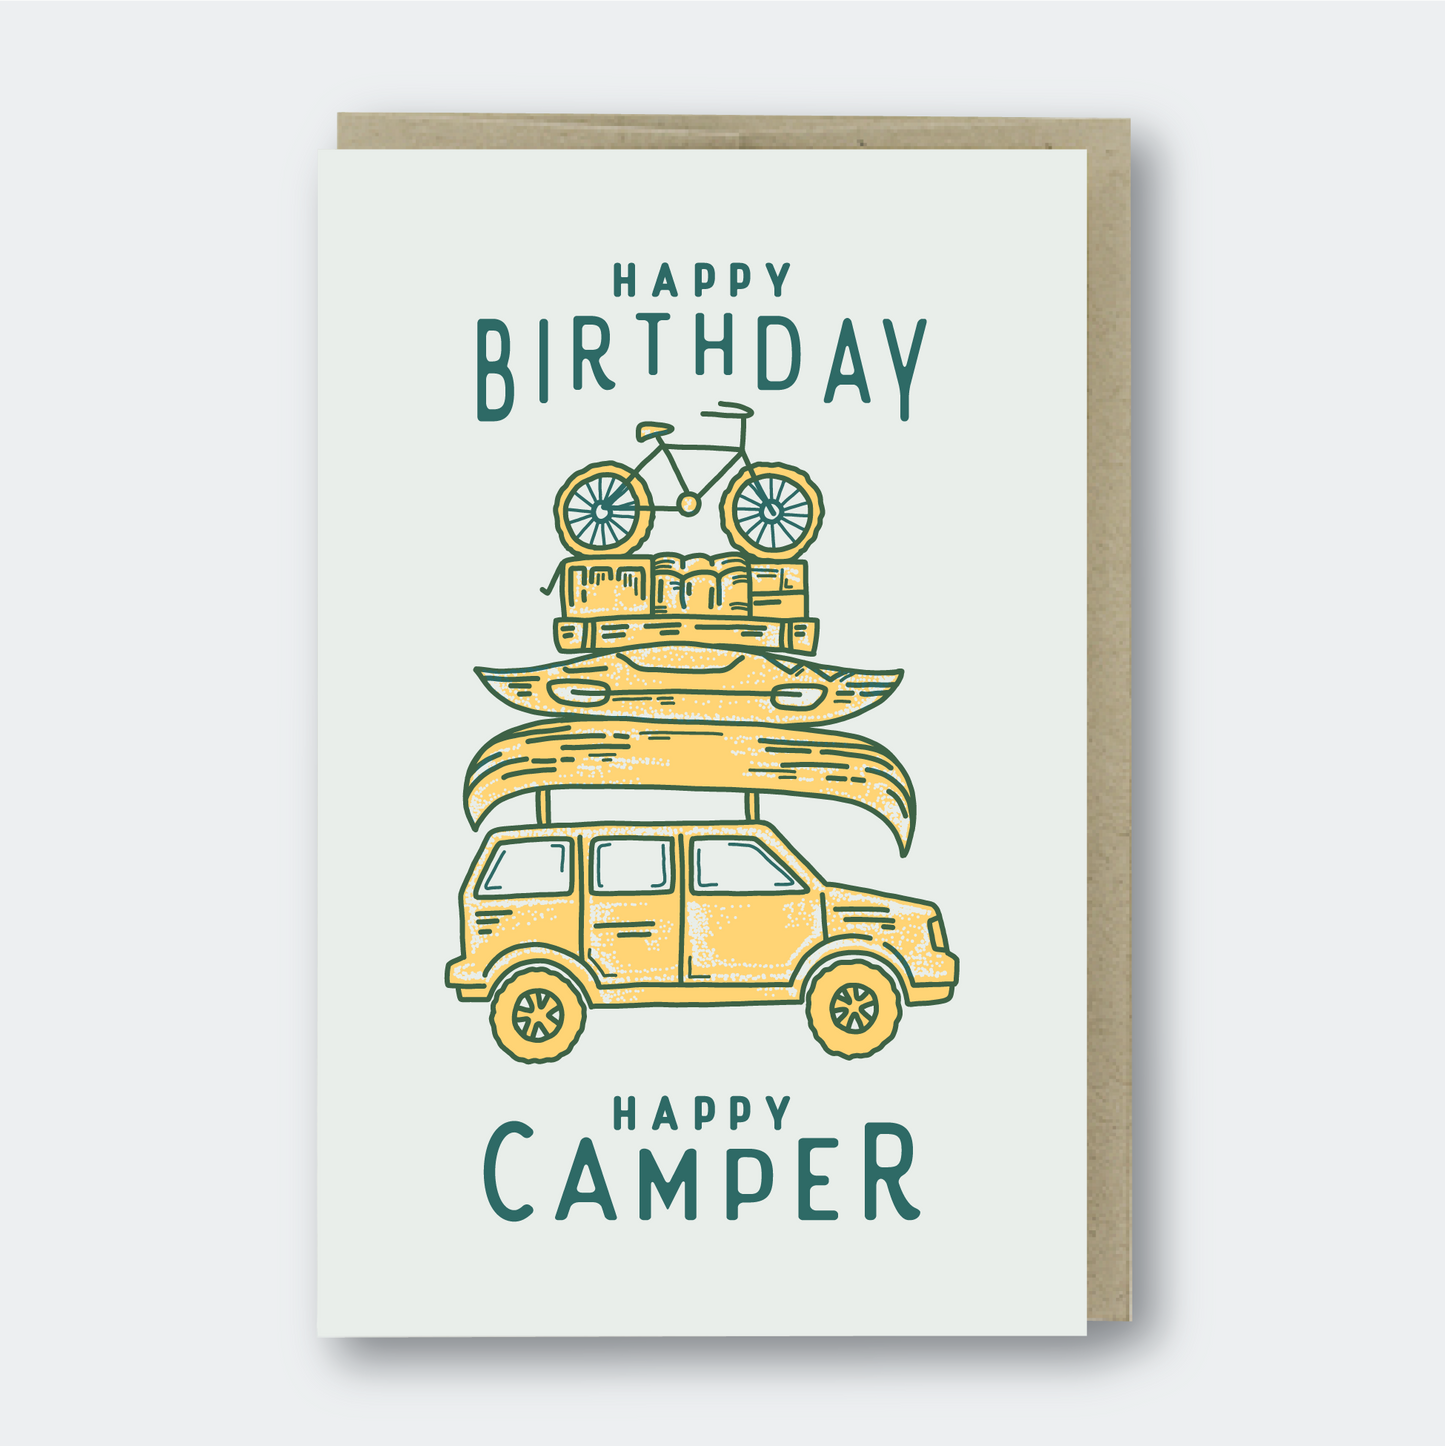 Happy Camper Birthday Greeting Card